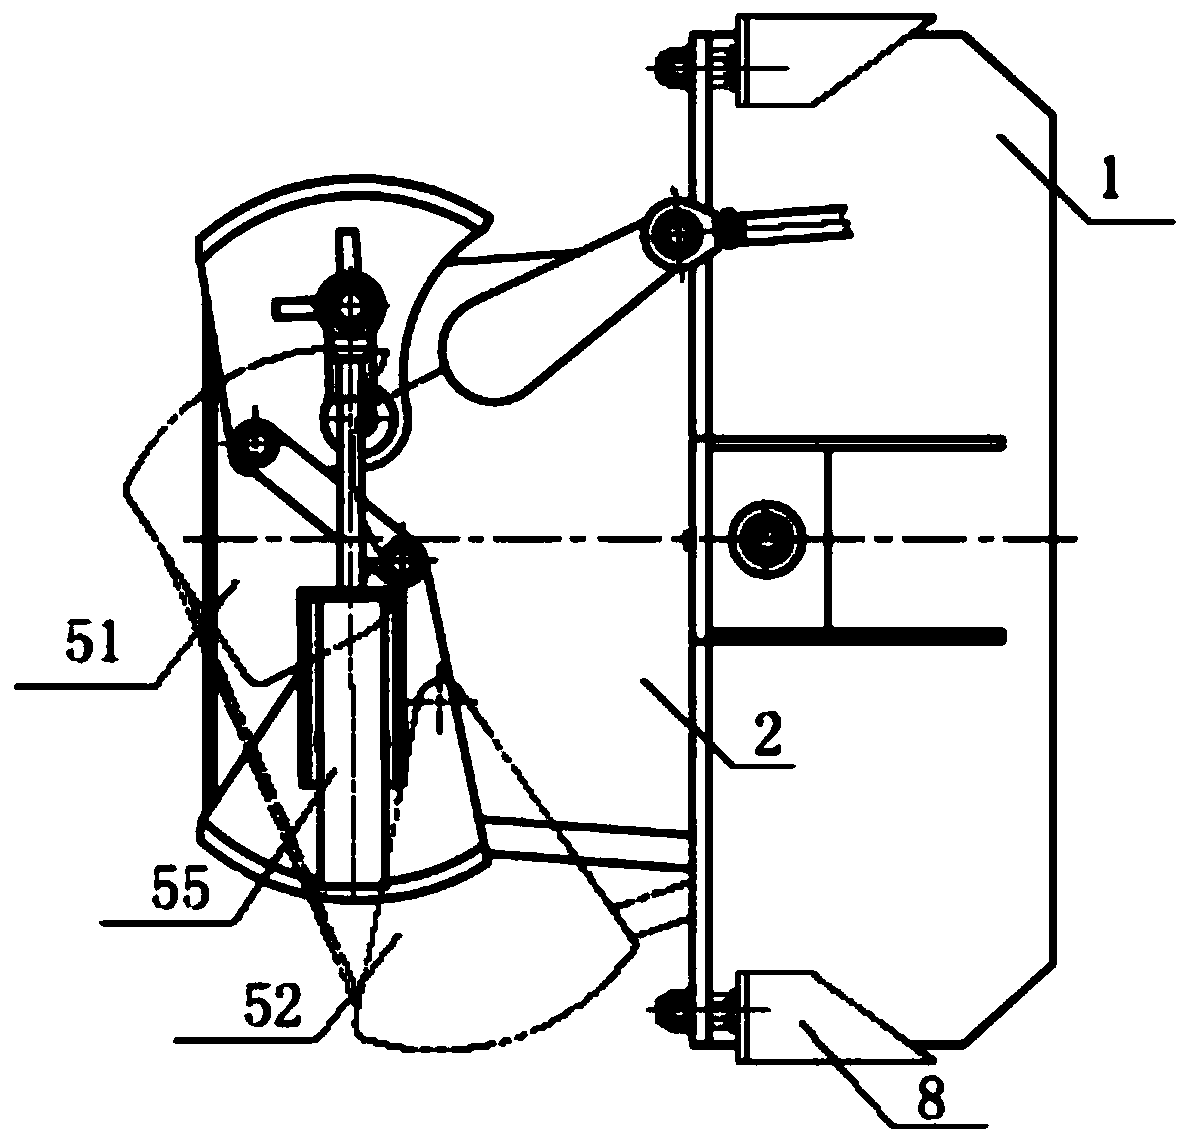 Modular water-jet propulsion steering and backward navigation mechanism